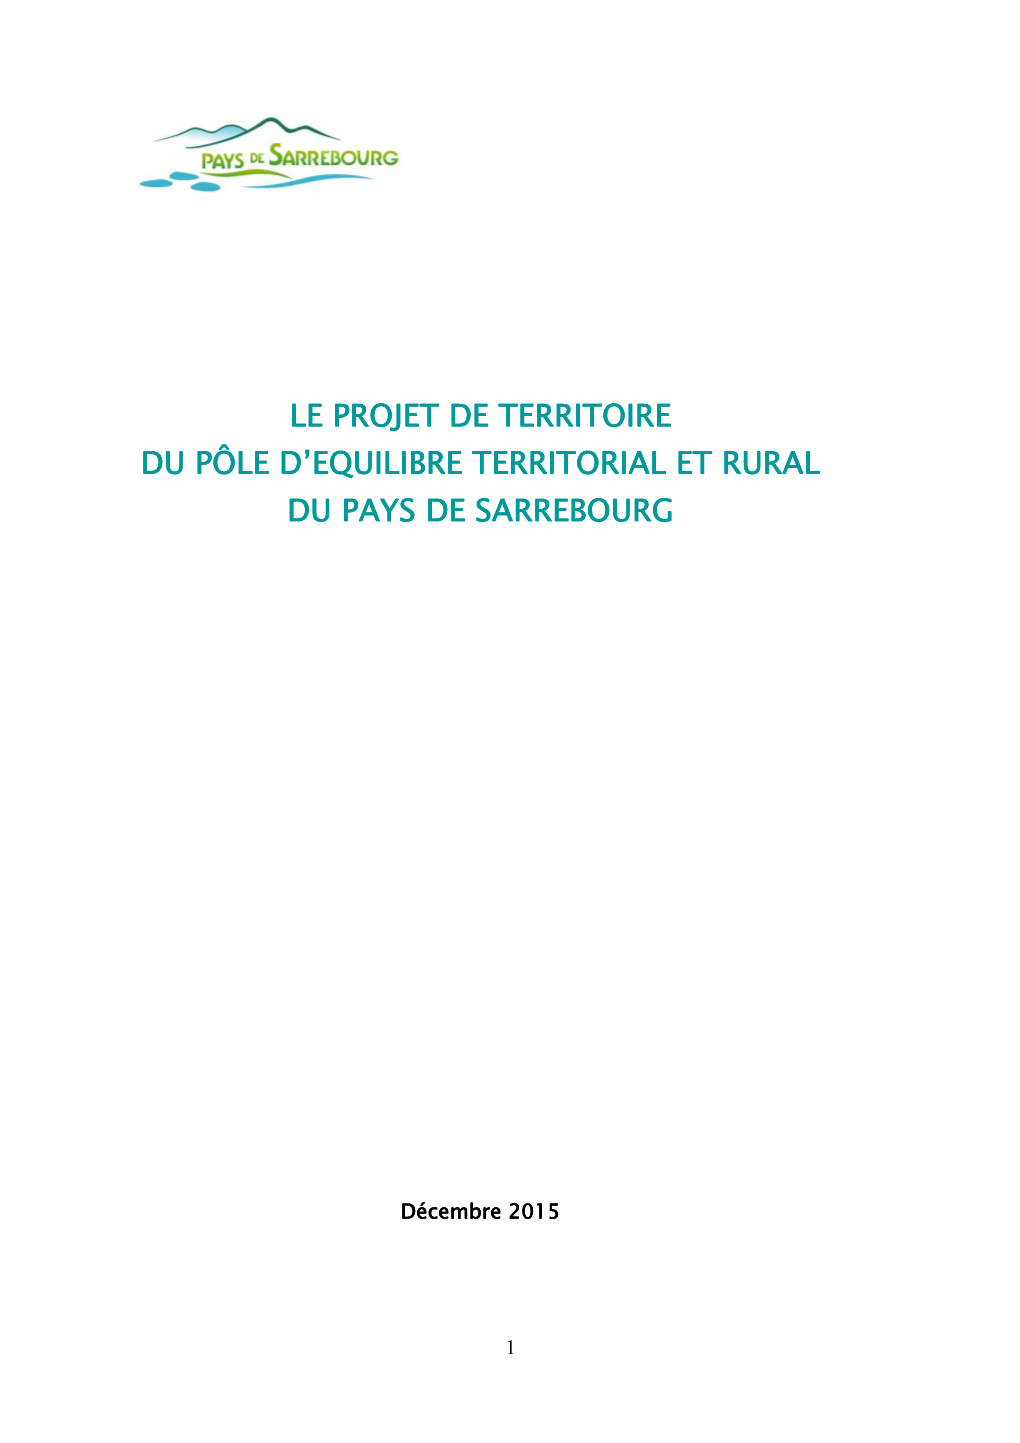 PROJET DE TERRITOIRE PETR PAYS DE SARREBOURG Forum 1 : 2 Oct